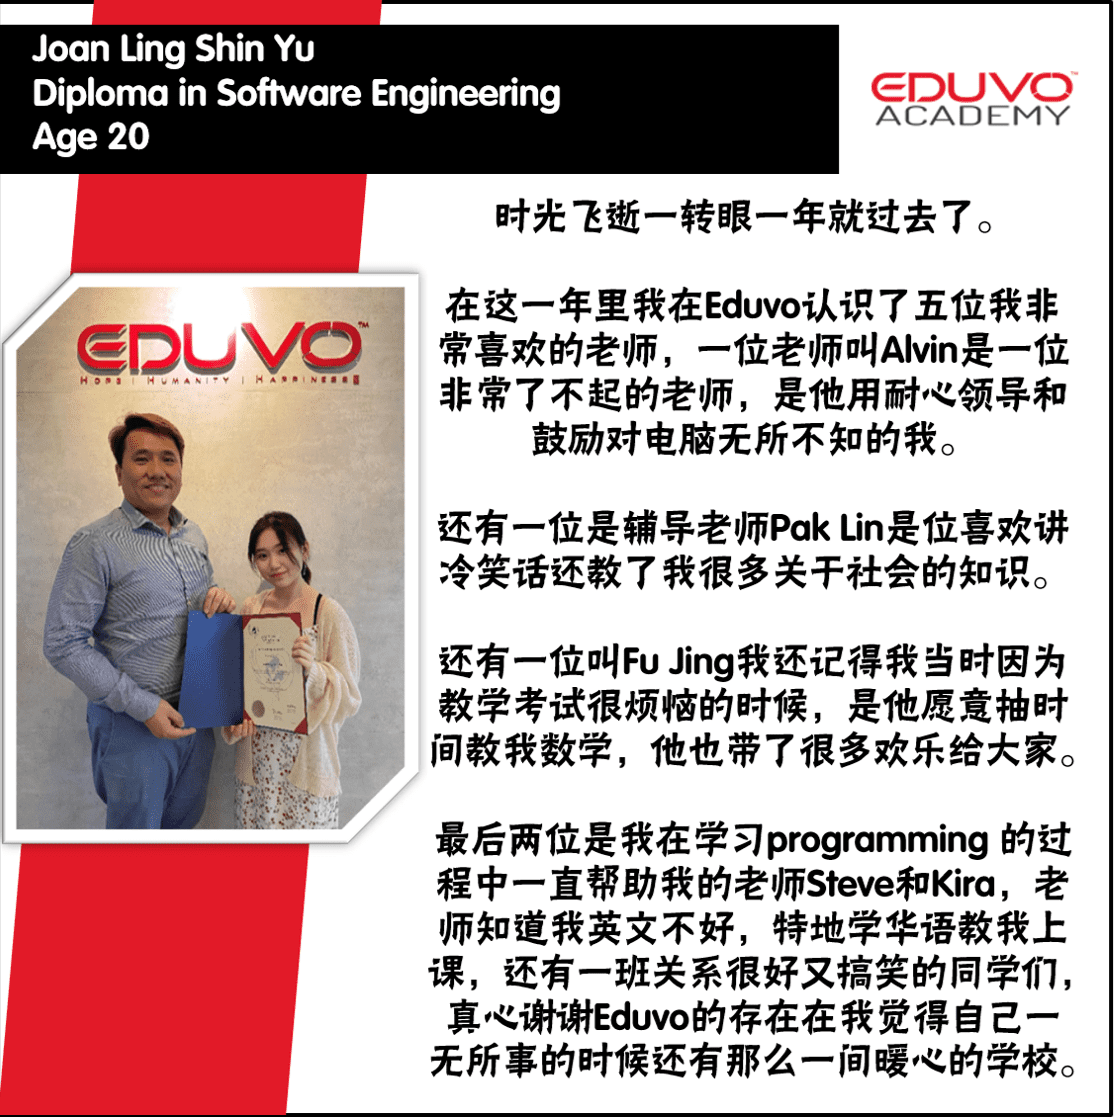 Diploma in Software Engineering - Joan Ling Shin Yu